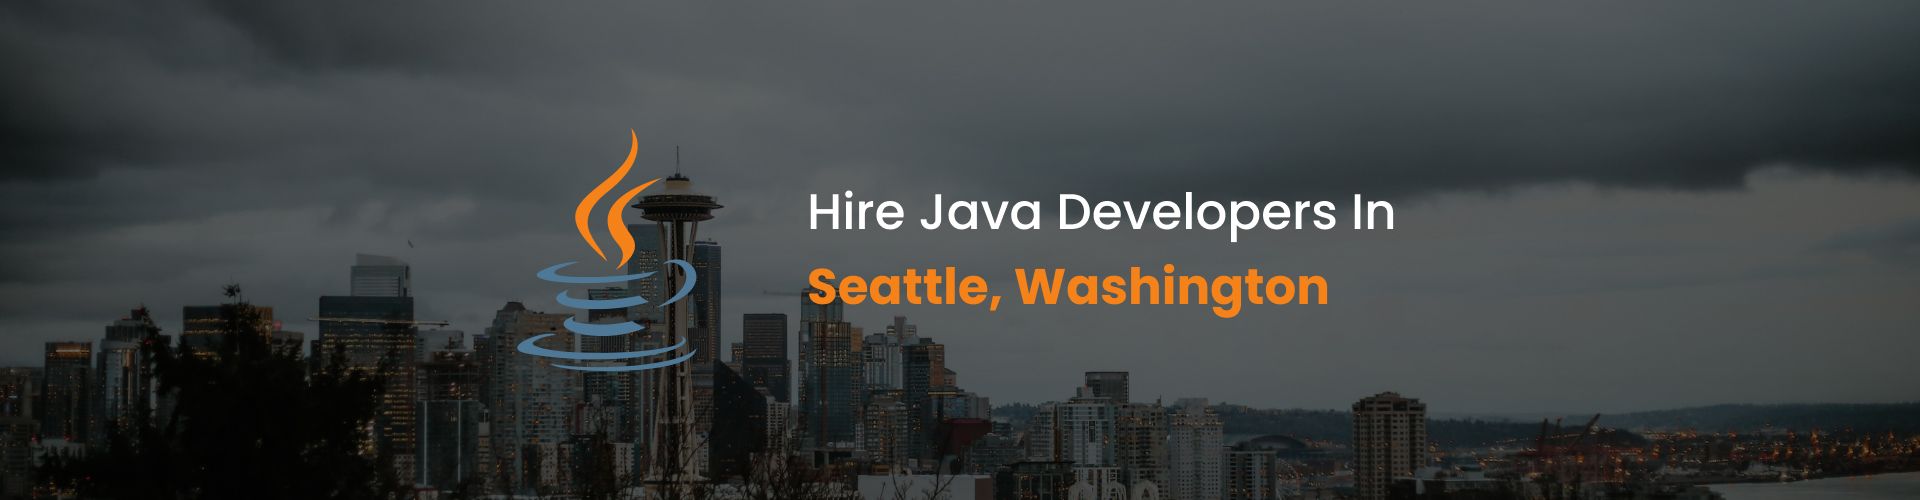 hire java developers in seattle, washington